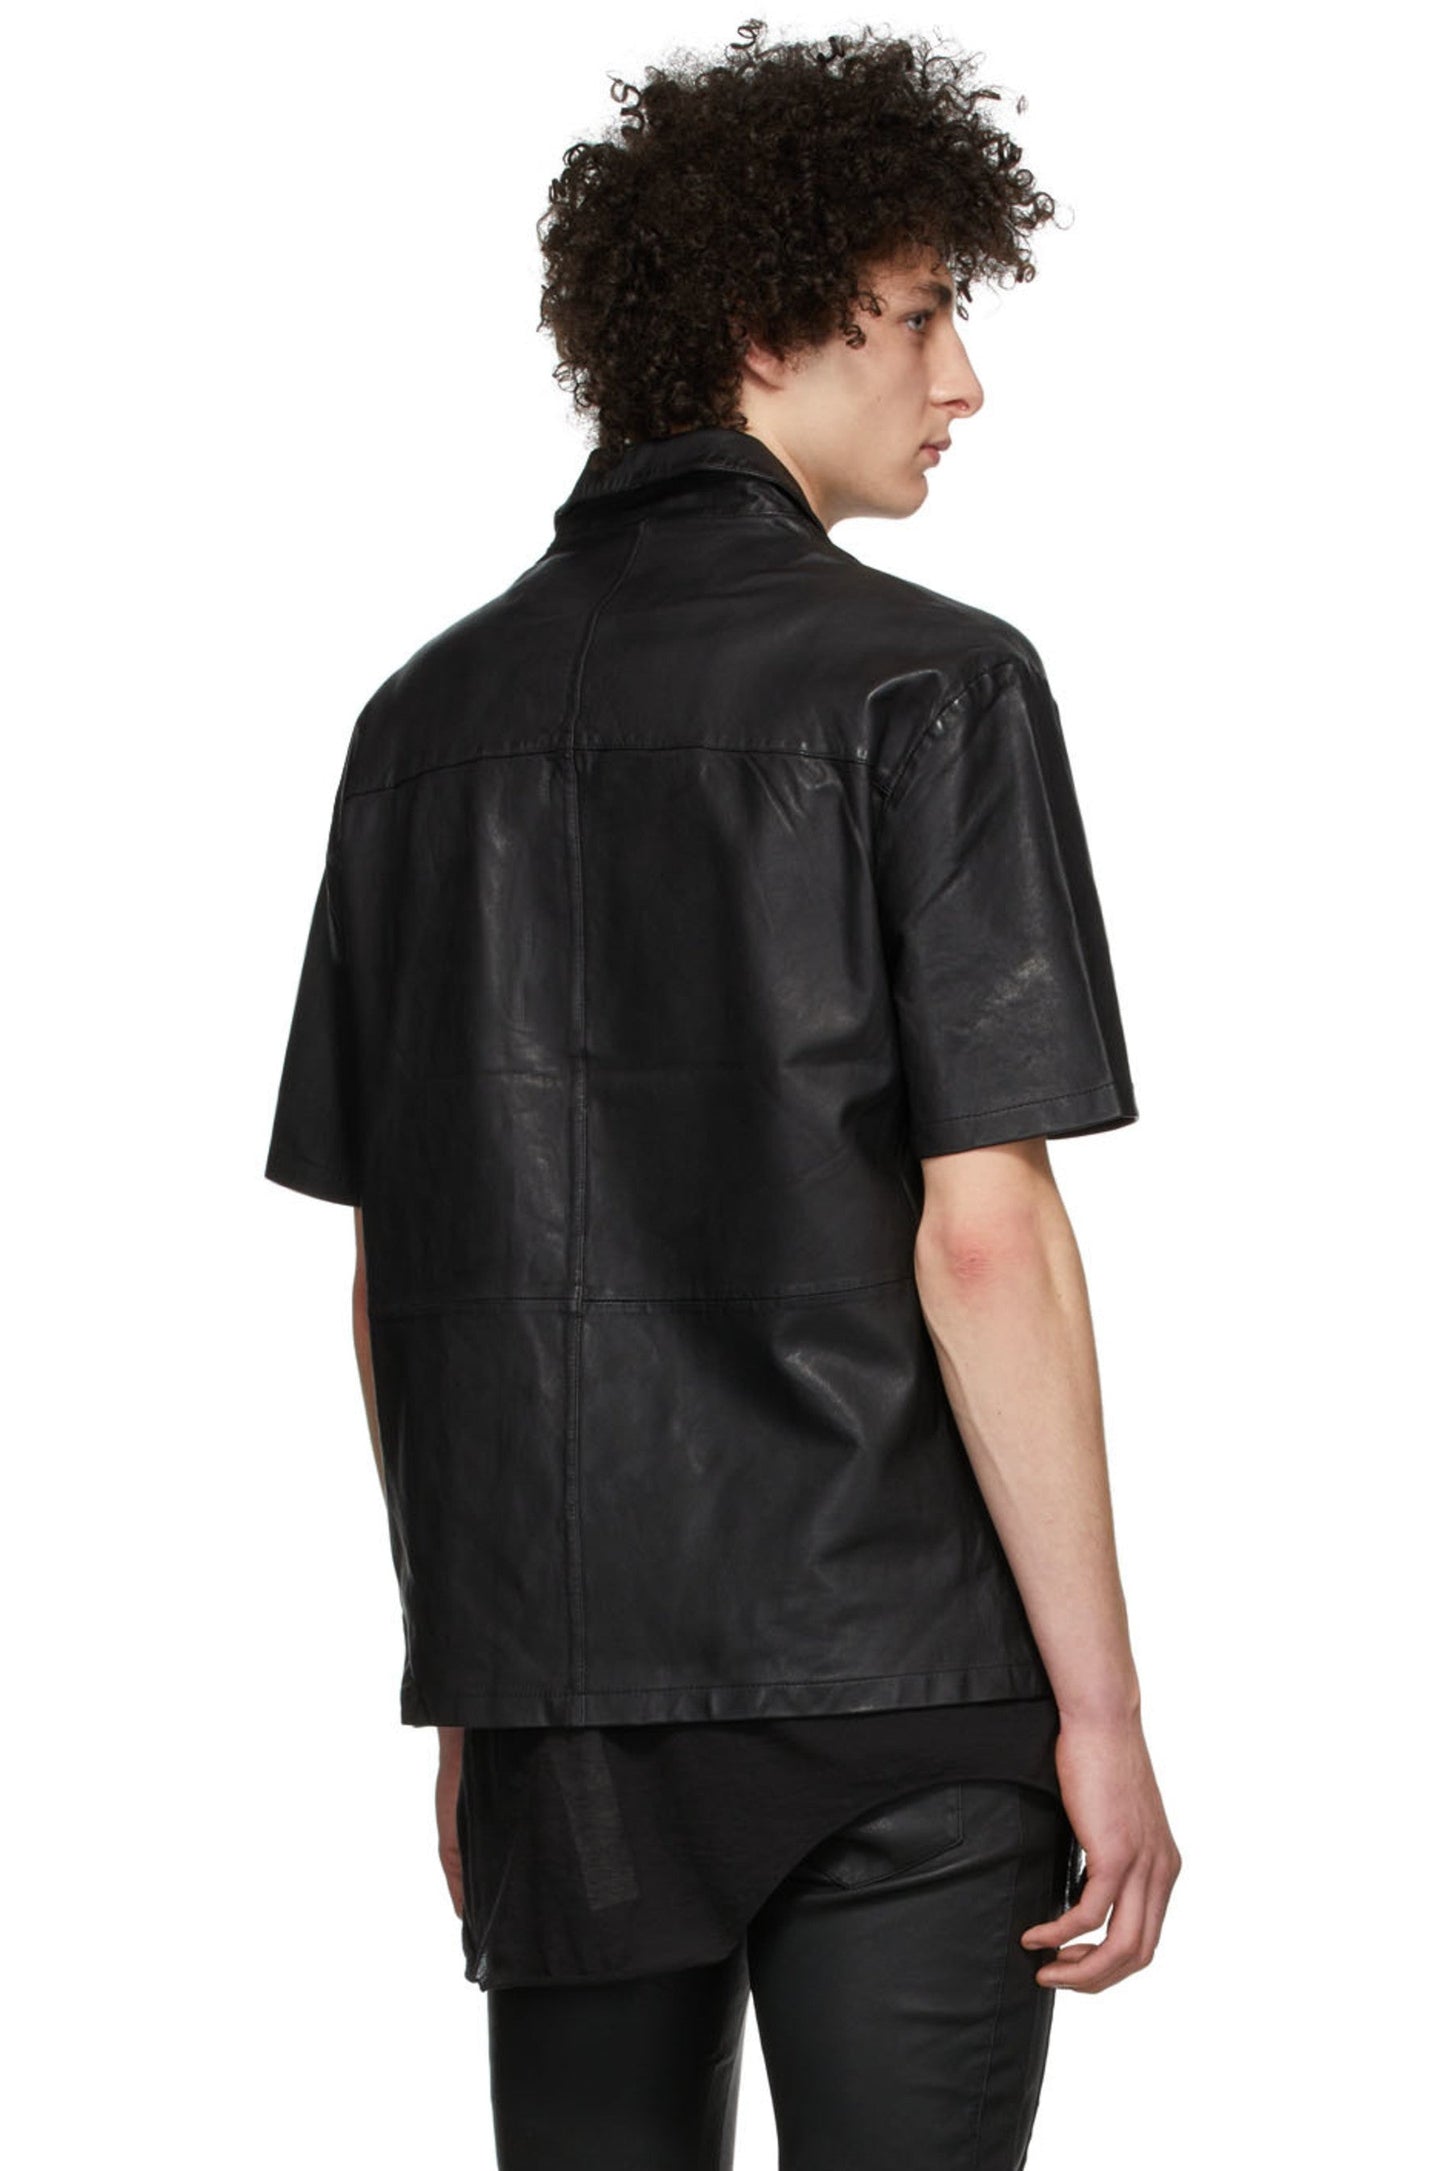 Men’s Trendy Black Leather Shirt